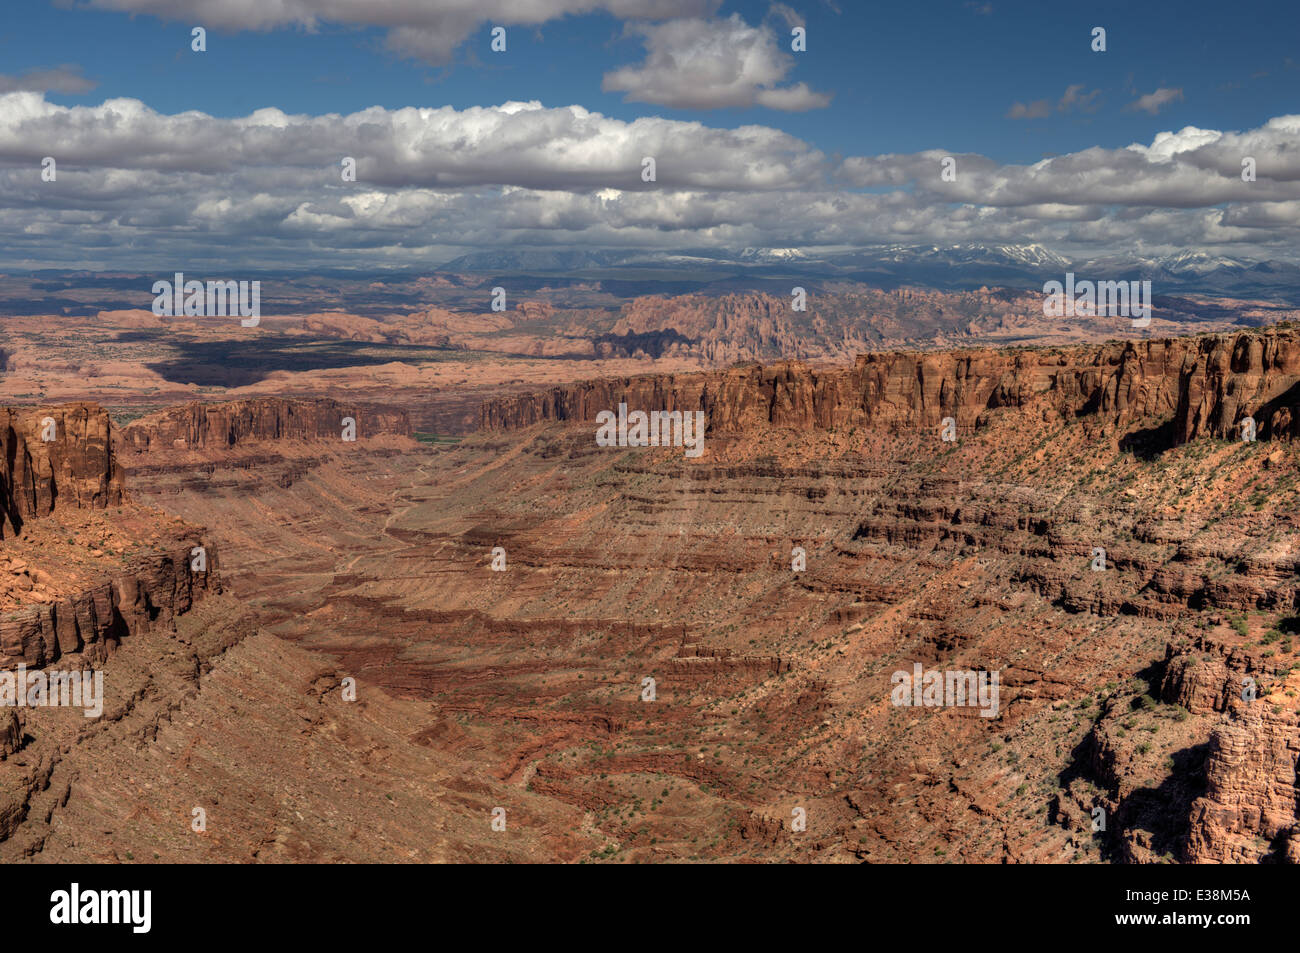 Canyon lungo, vicino a Moab, Utah. La Sal Mountains sono in distanza. Foto Stock